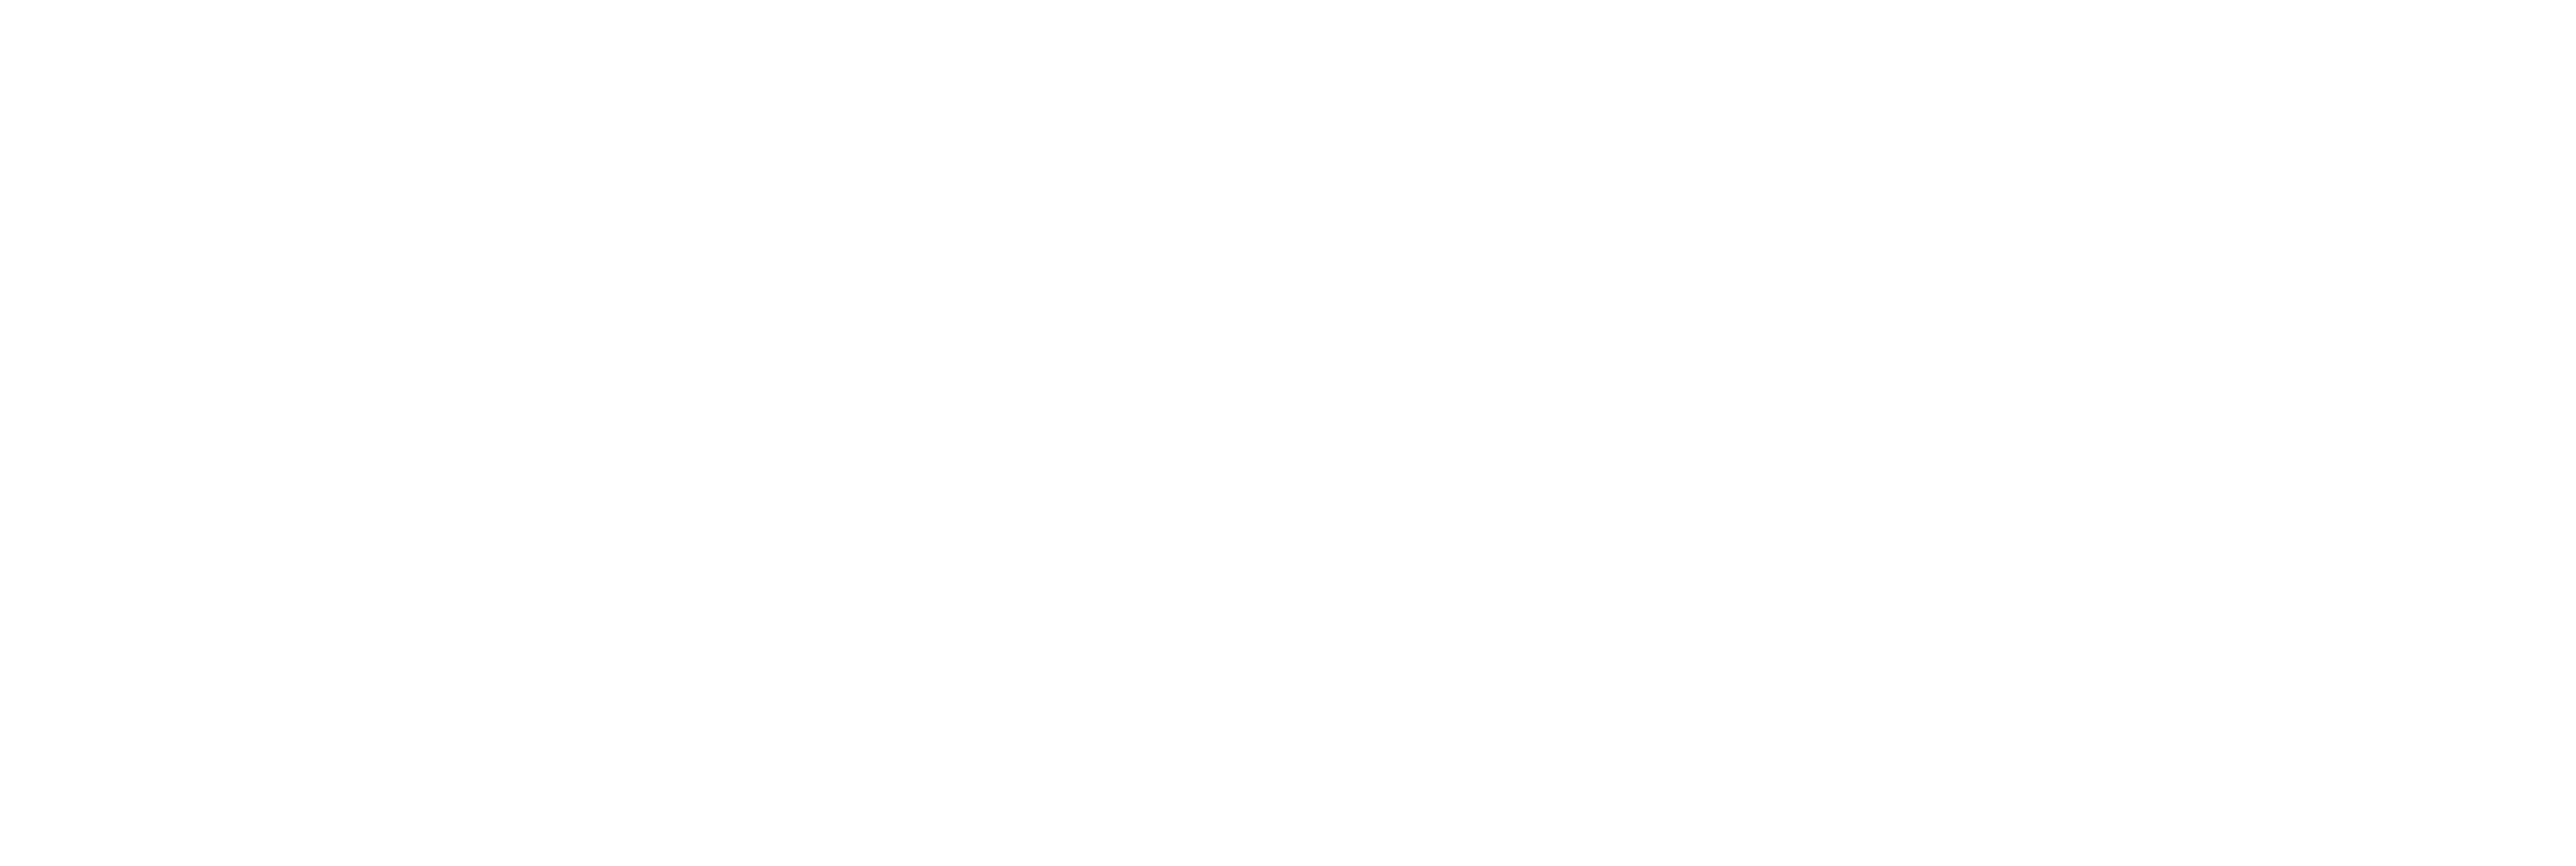 James Baker & Associates|International Tax Consultants